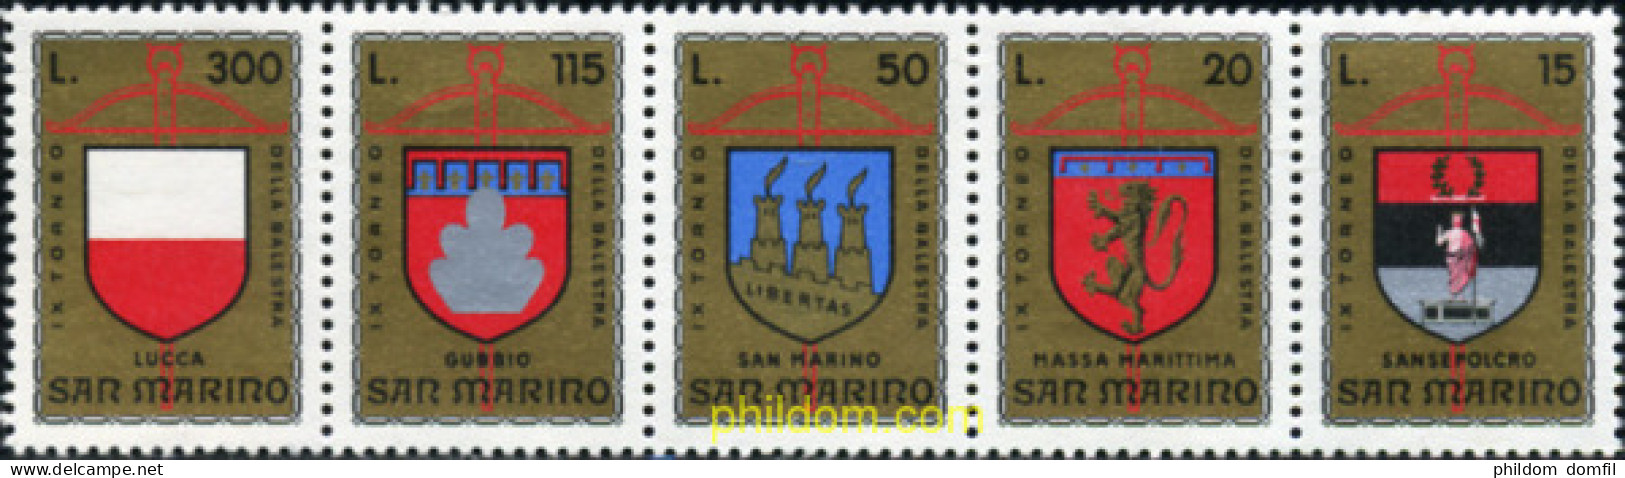 177101 MNH SAN MARINO 1974 9 TORNEO DE LA BALLESTA - Unused Stamps